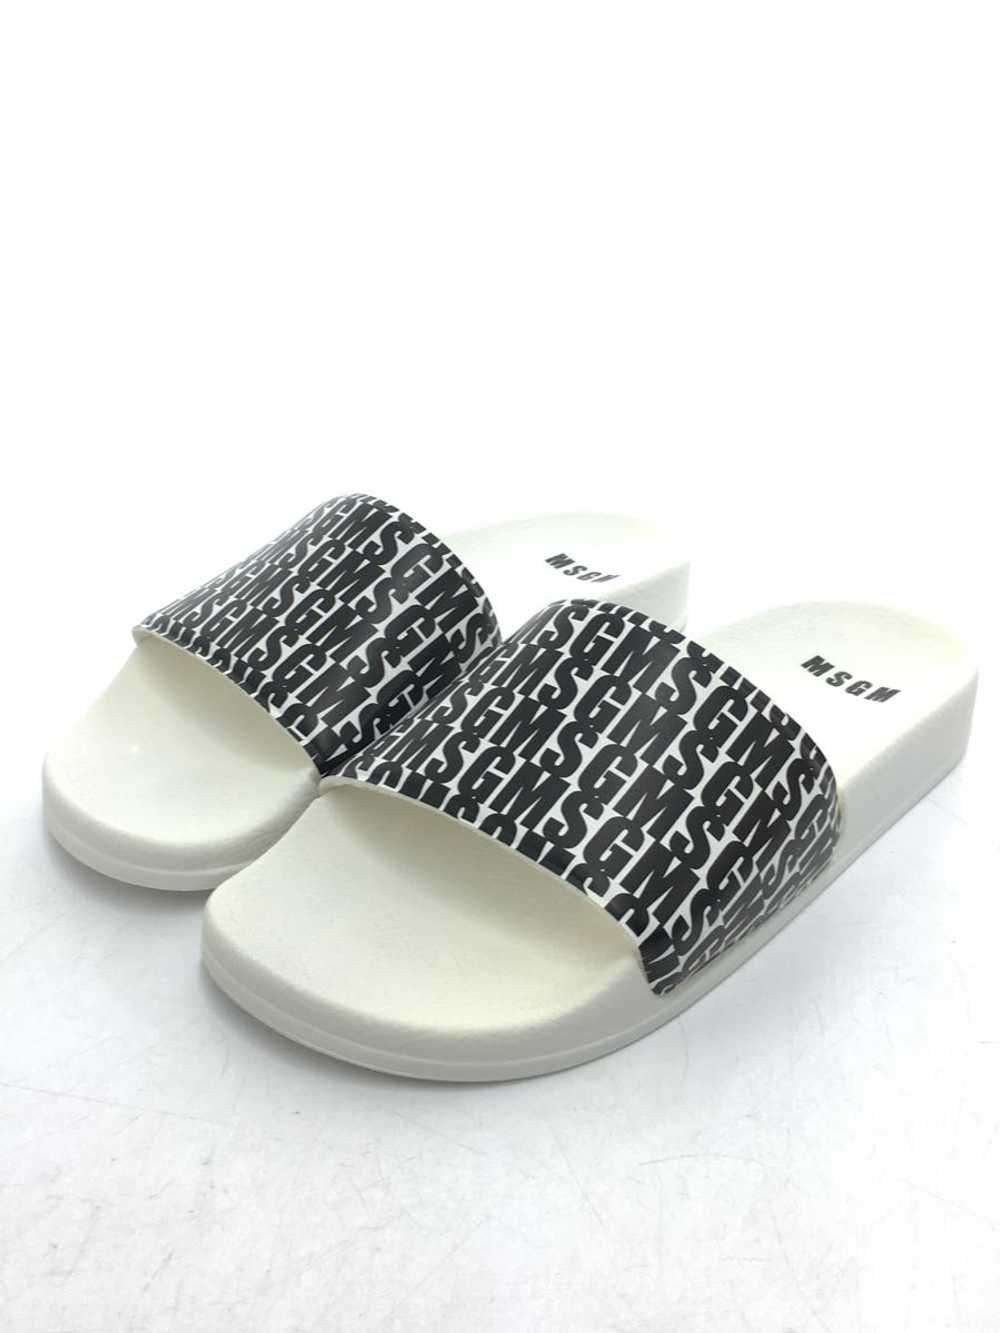 Msgm Sandals/37/White/Pool-Slide Shoes BLp96 - image 2